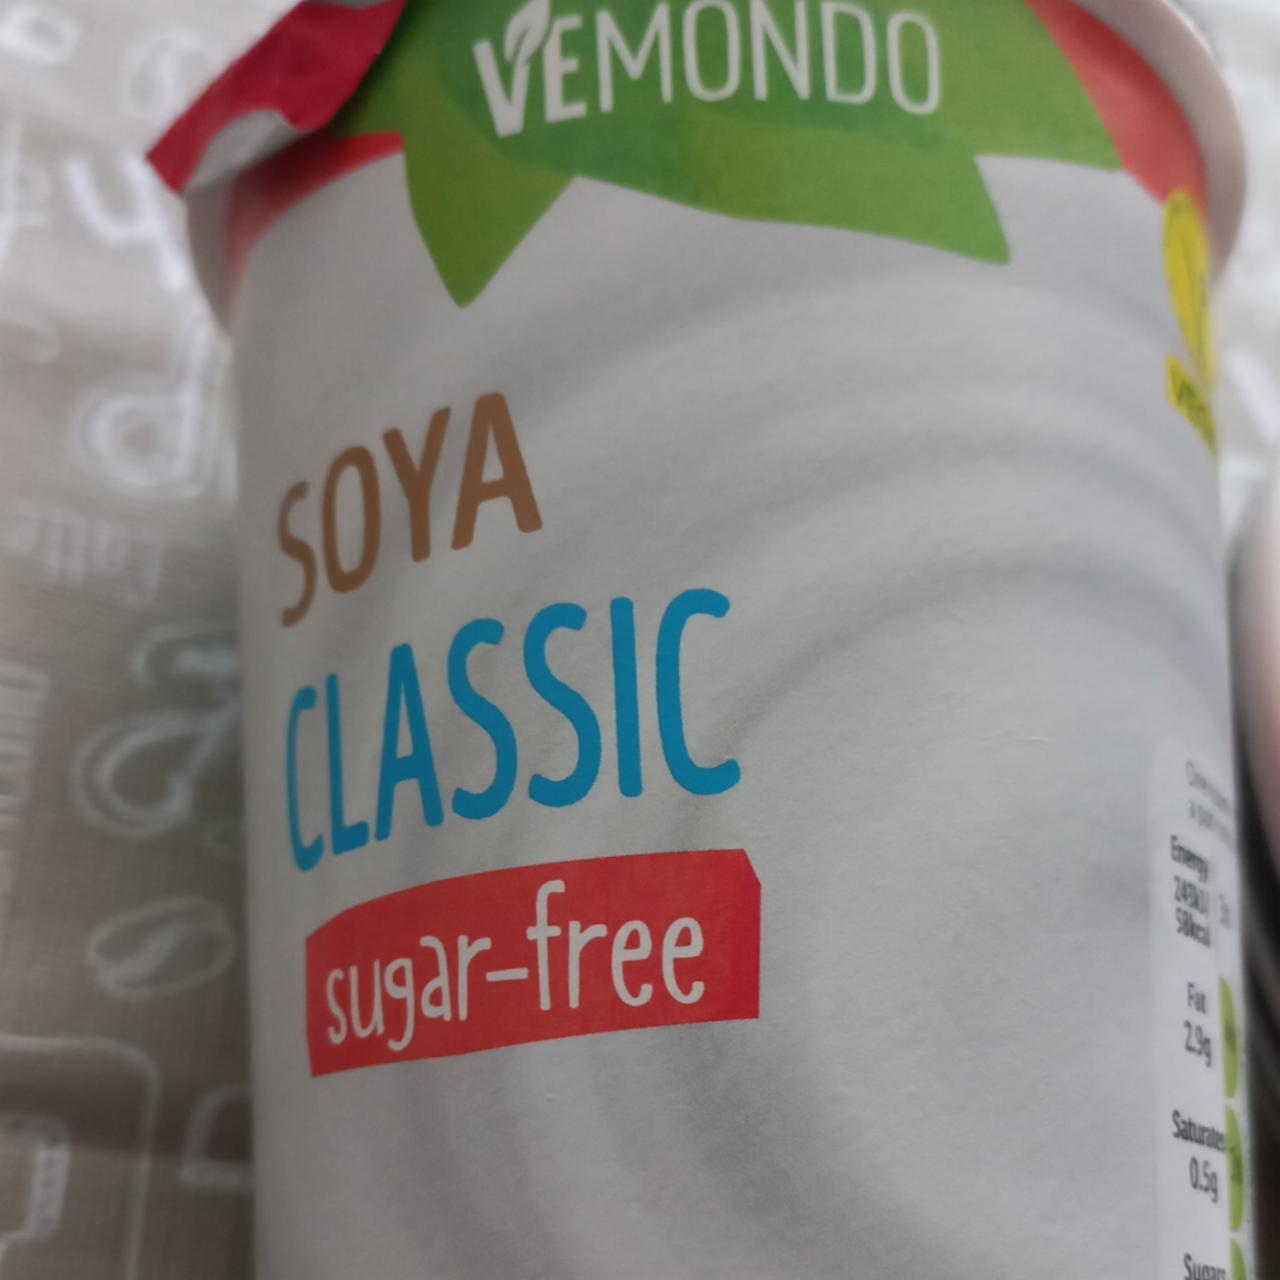 Képek - soya classic sugar-free Vemondo